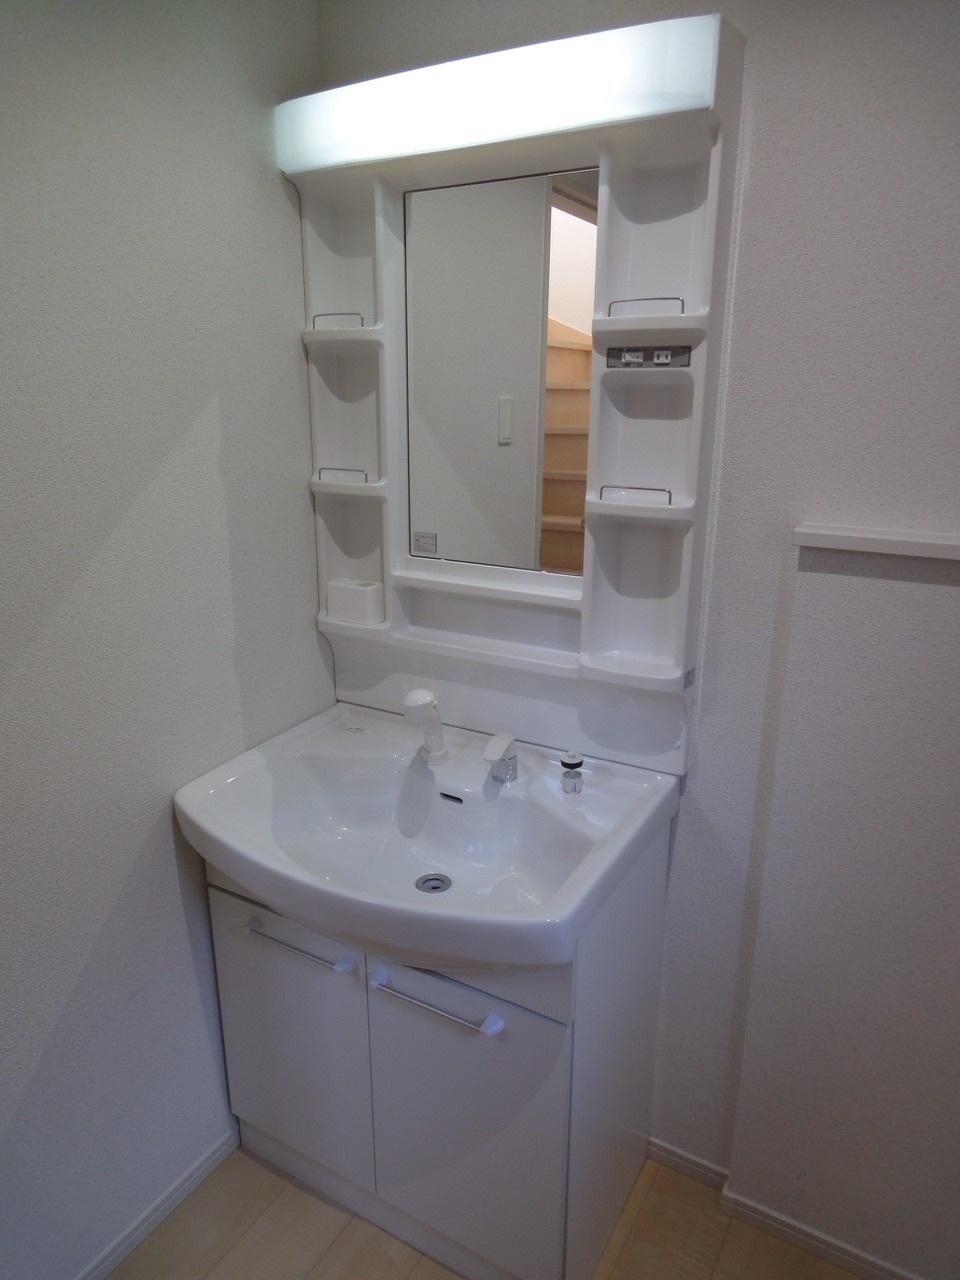 Wash basin, toilet. (2013.12.24 shooting)